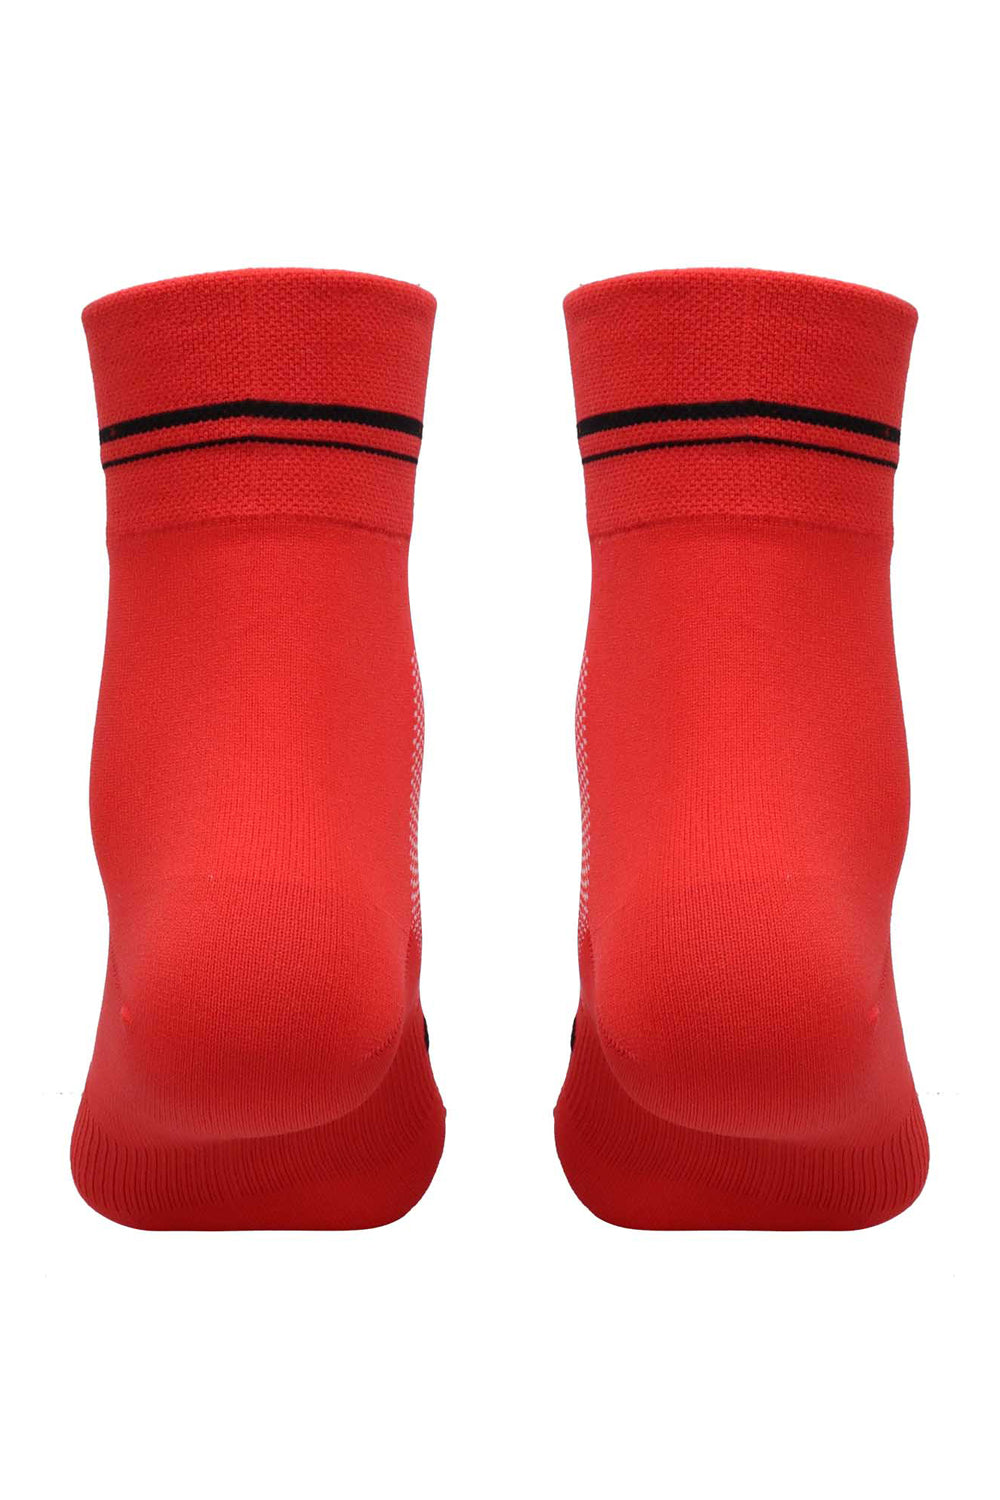 Sundried Red Cycle Socks S21 Socks Activewear